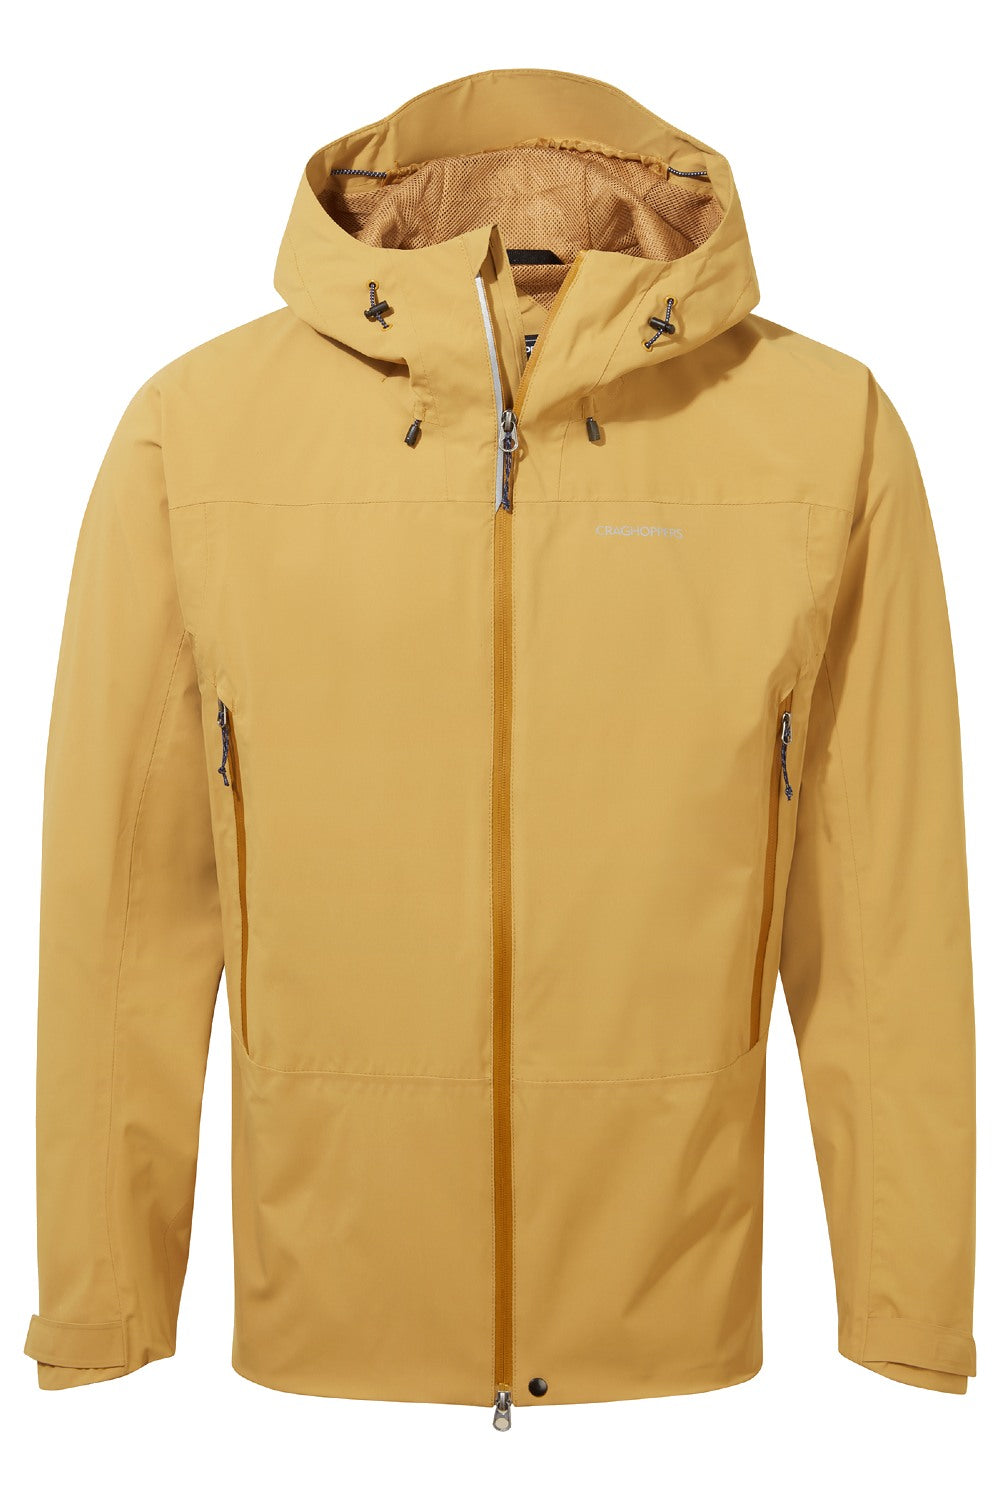 Craghoppers Gryffin Waterproof Jacket in Gingko Yellow